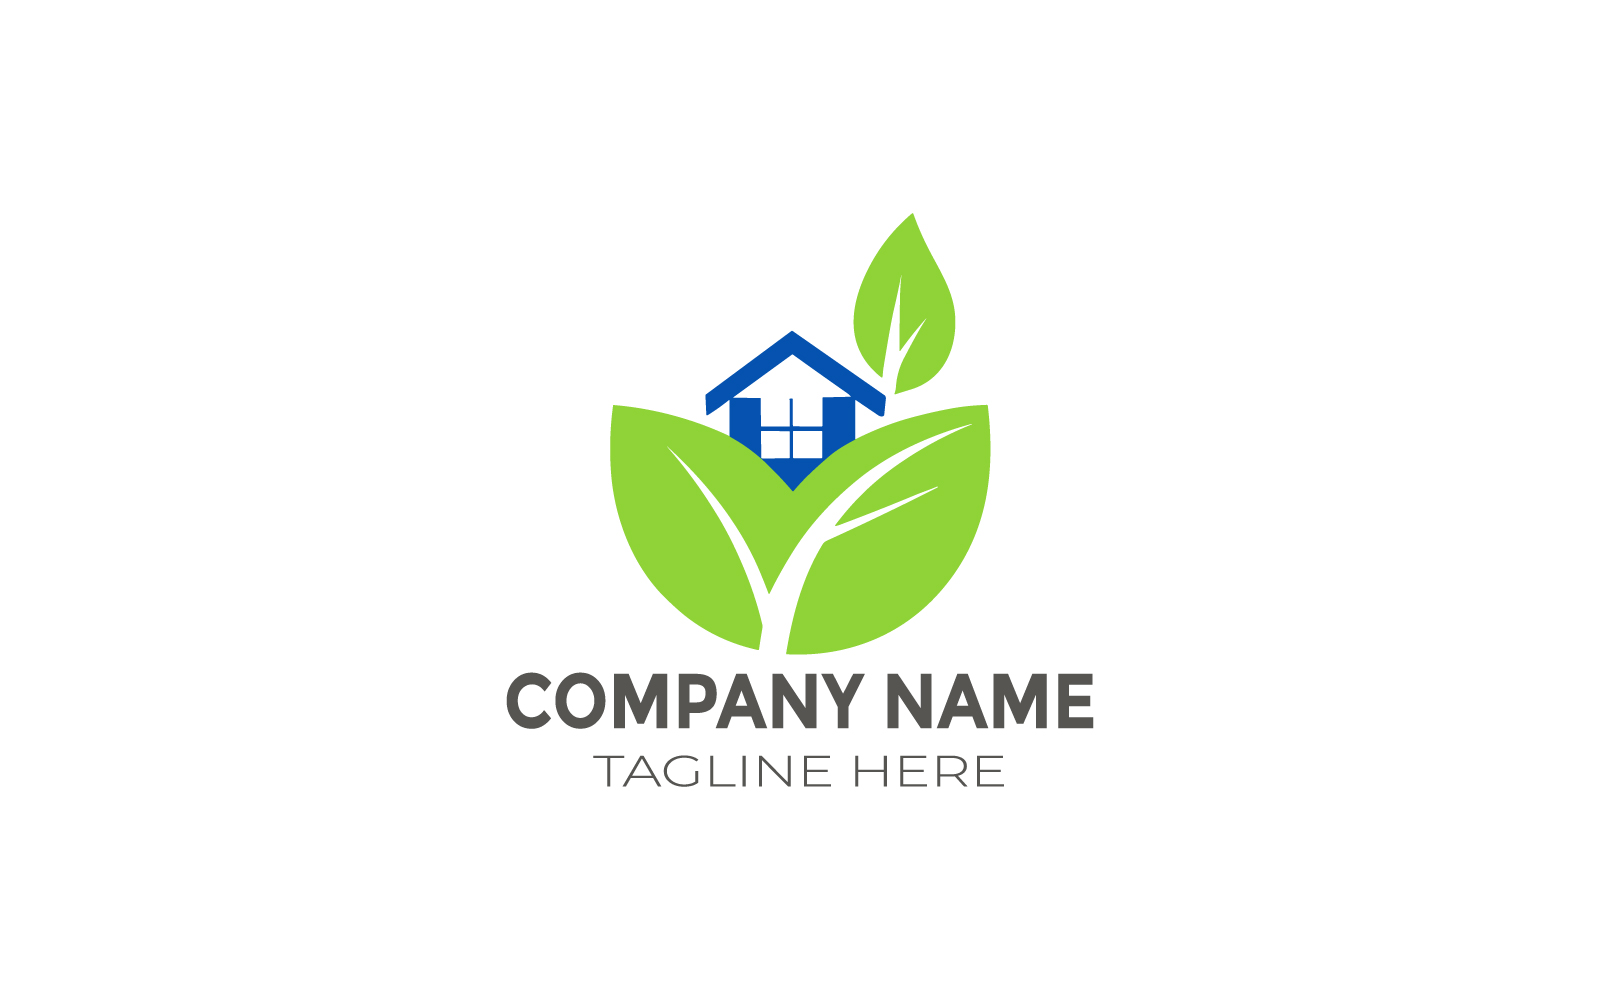 Creative Real Estate Logo Designs for a Memorable Brand Identity